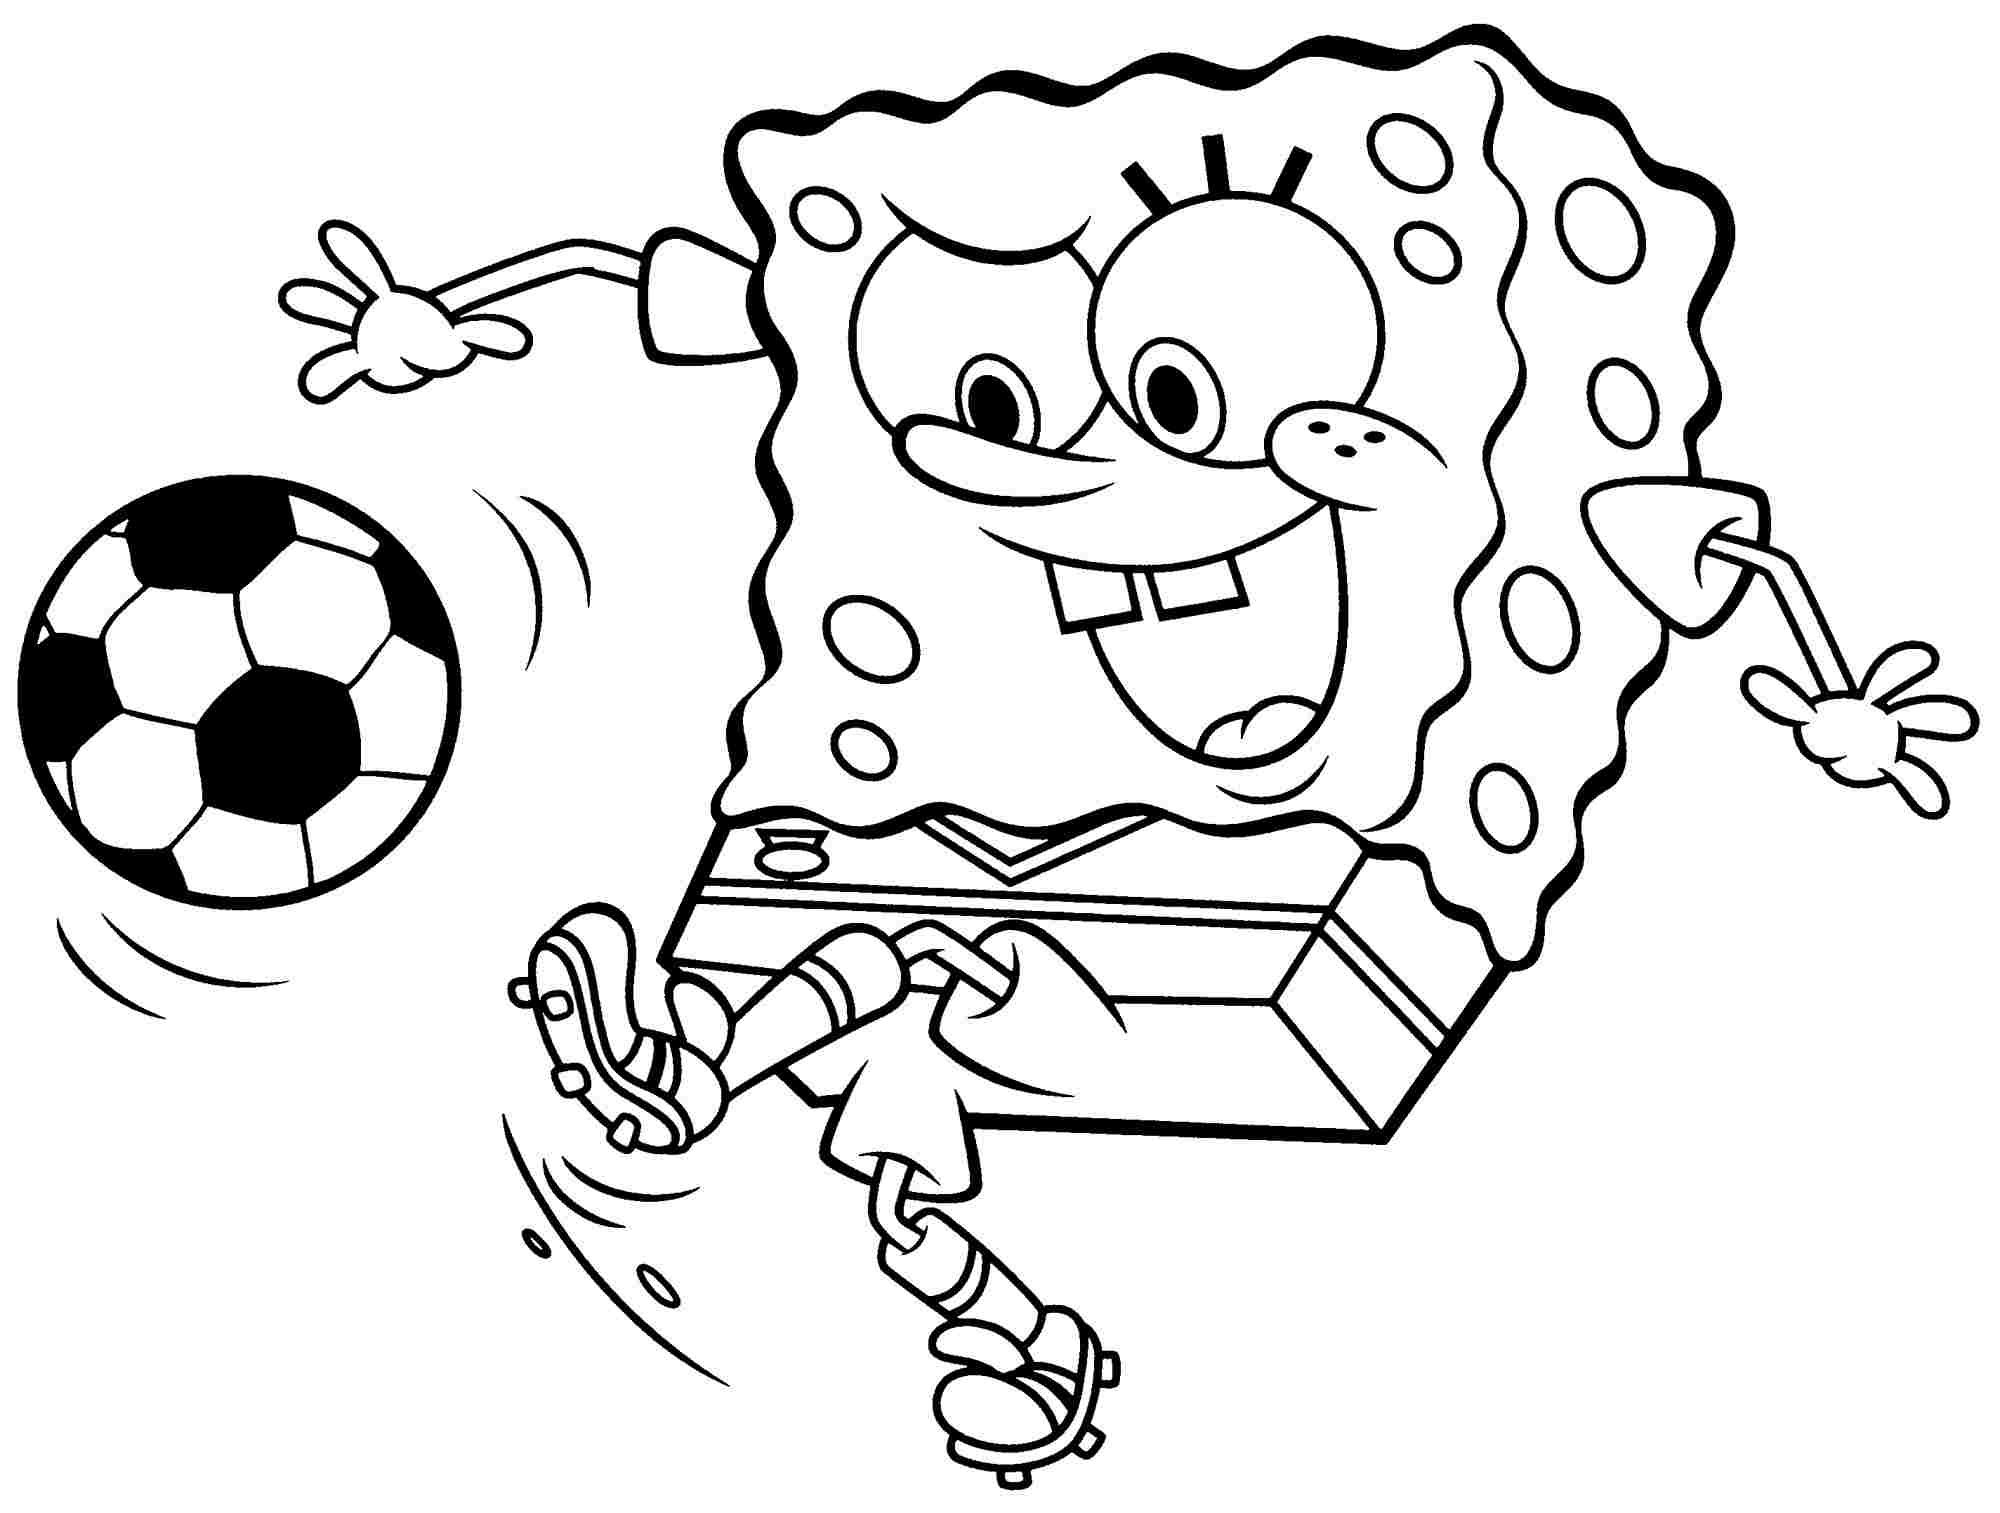 Spongebob Play Soccer Coloring Page